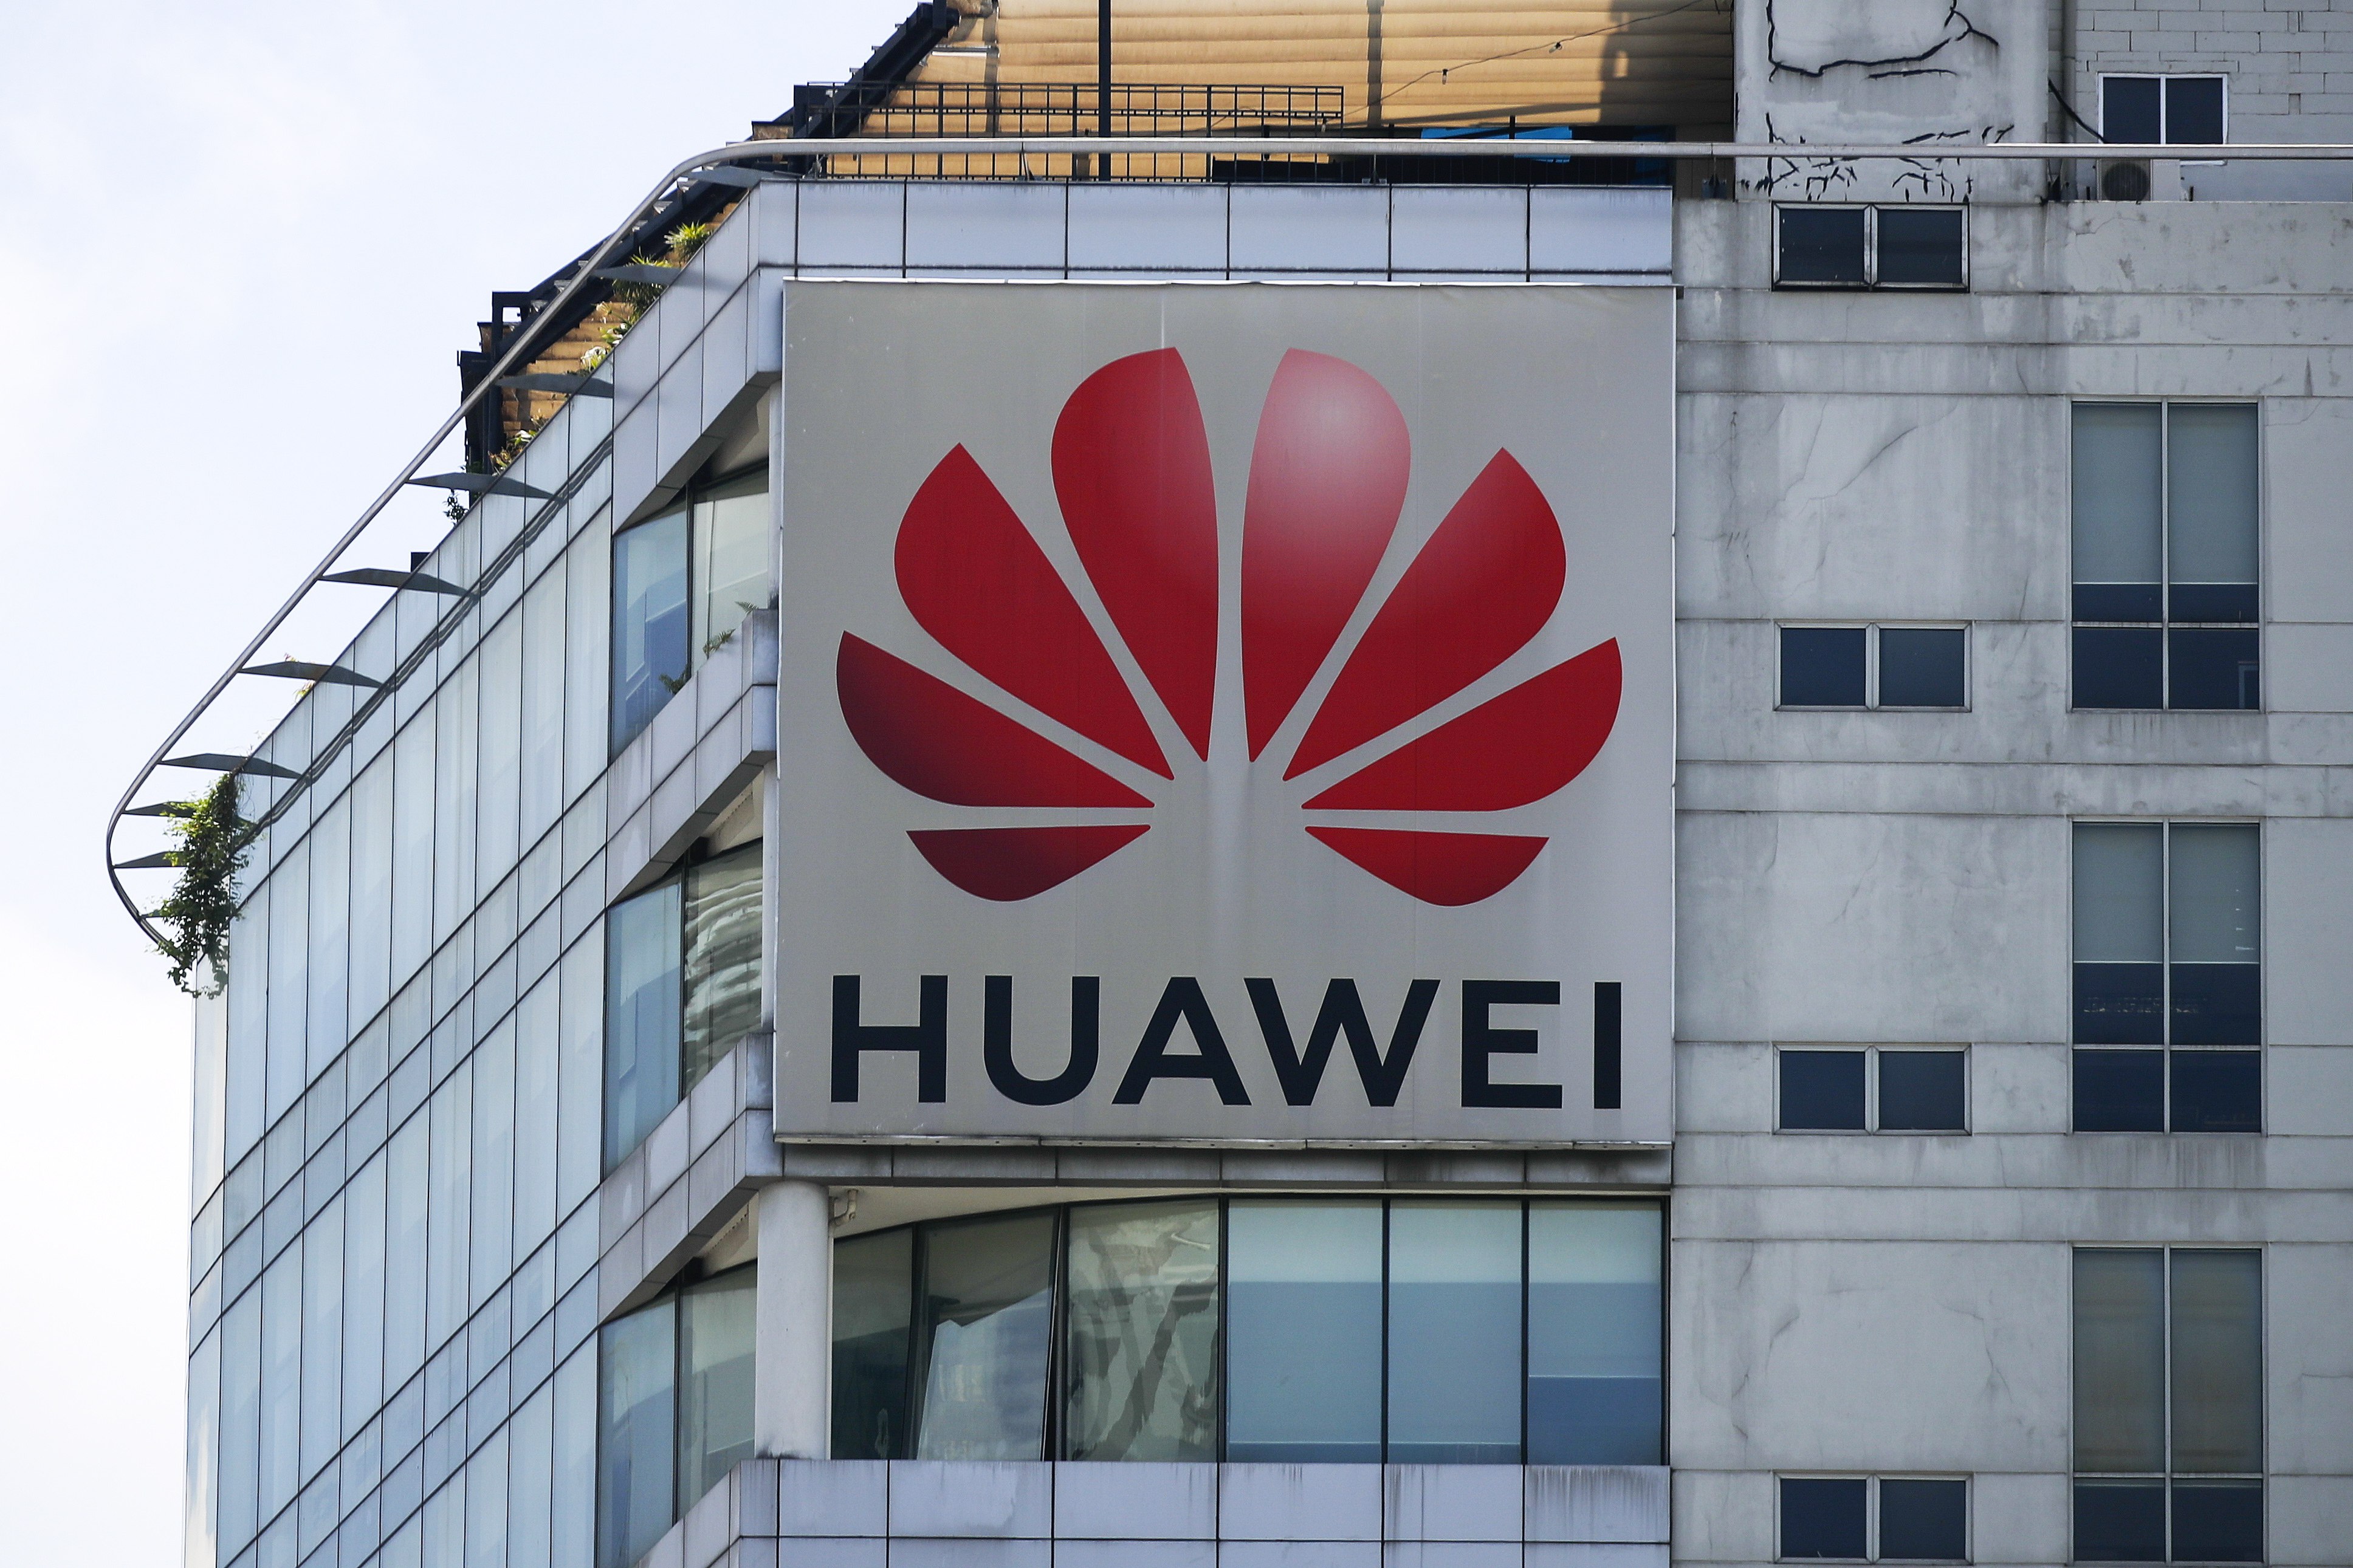 The Huawei logo is seen on the facade of a building in Kuala Lumpur, Malaysia, May 3, 2023. Photo: EPA-EFE